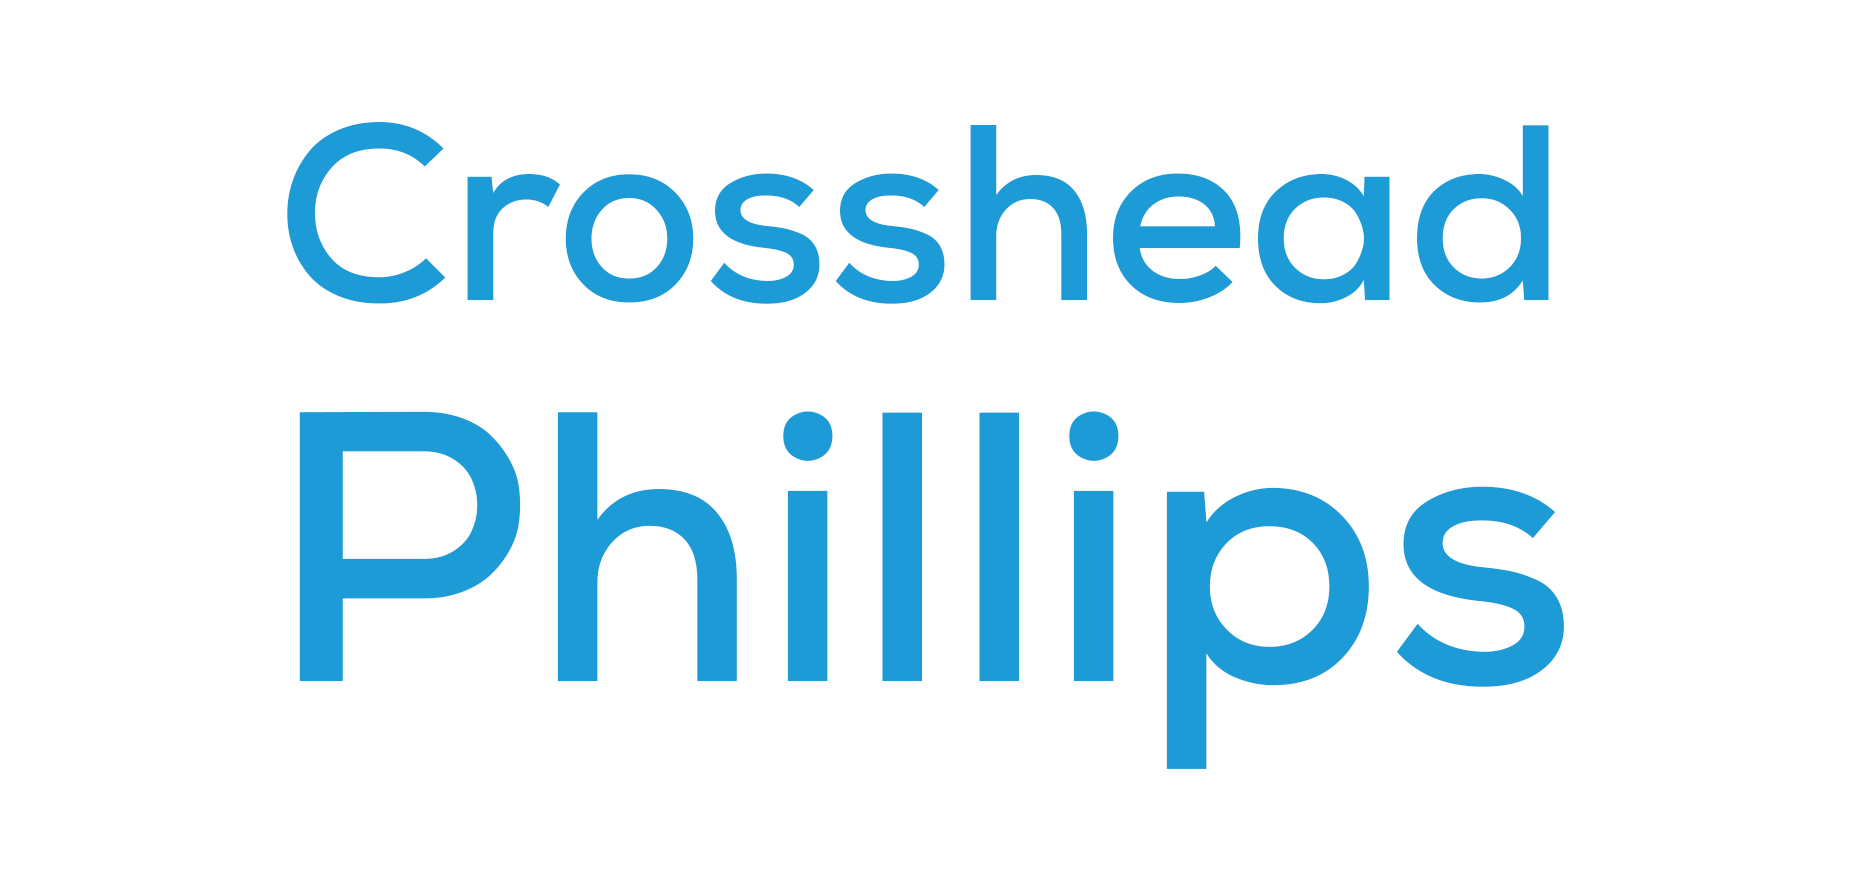 Crosshead-Phillips